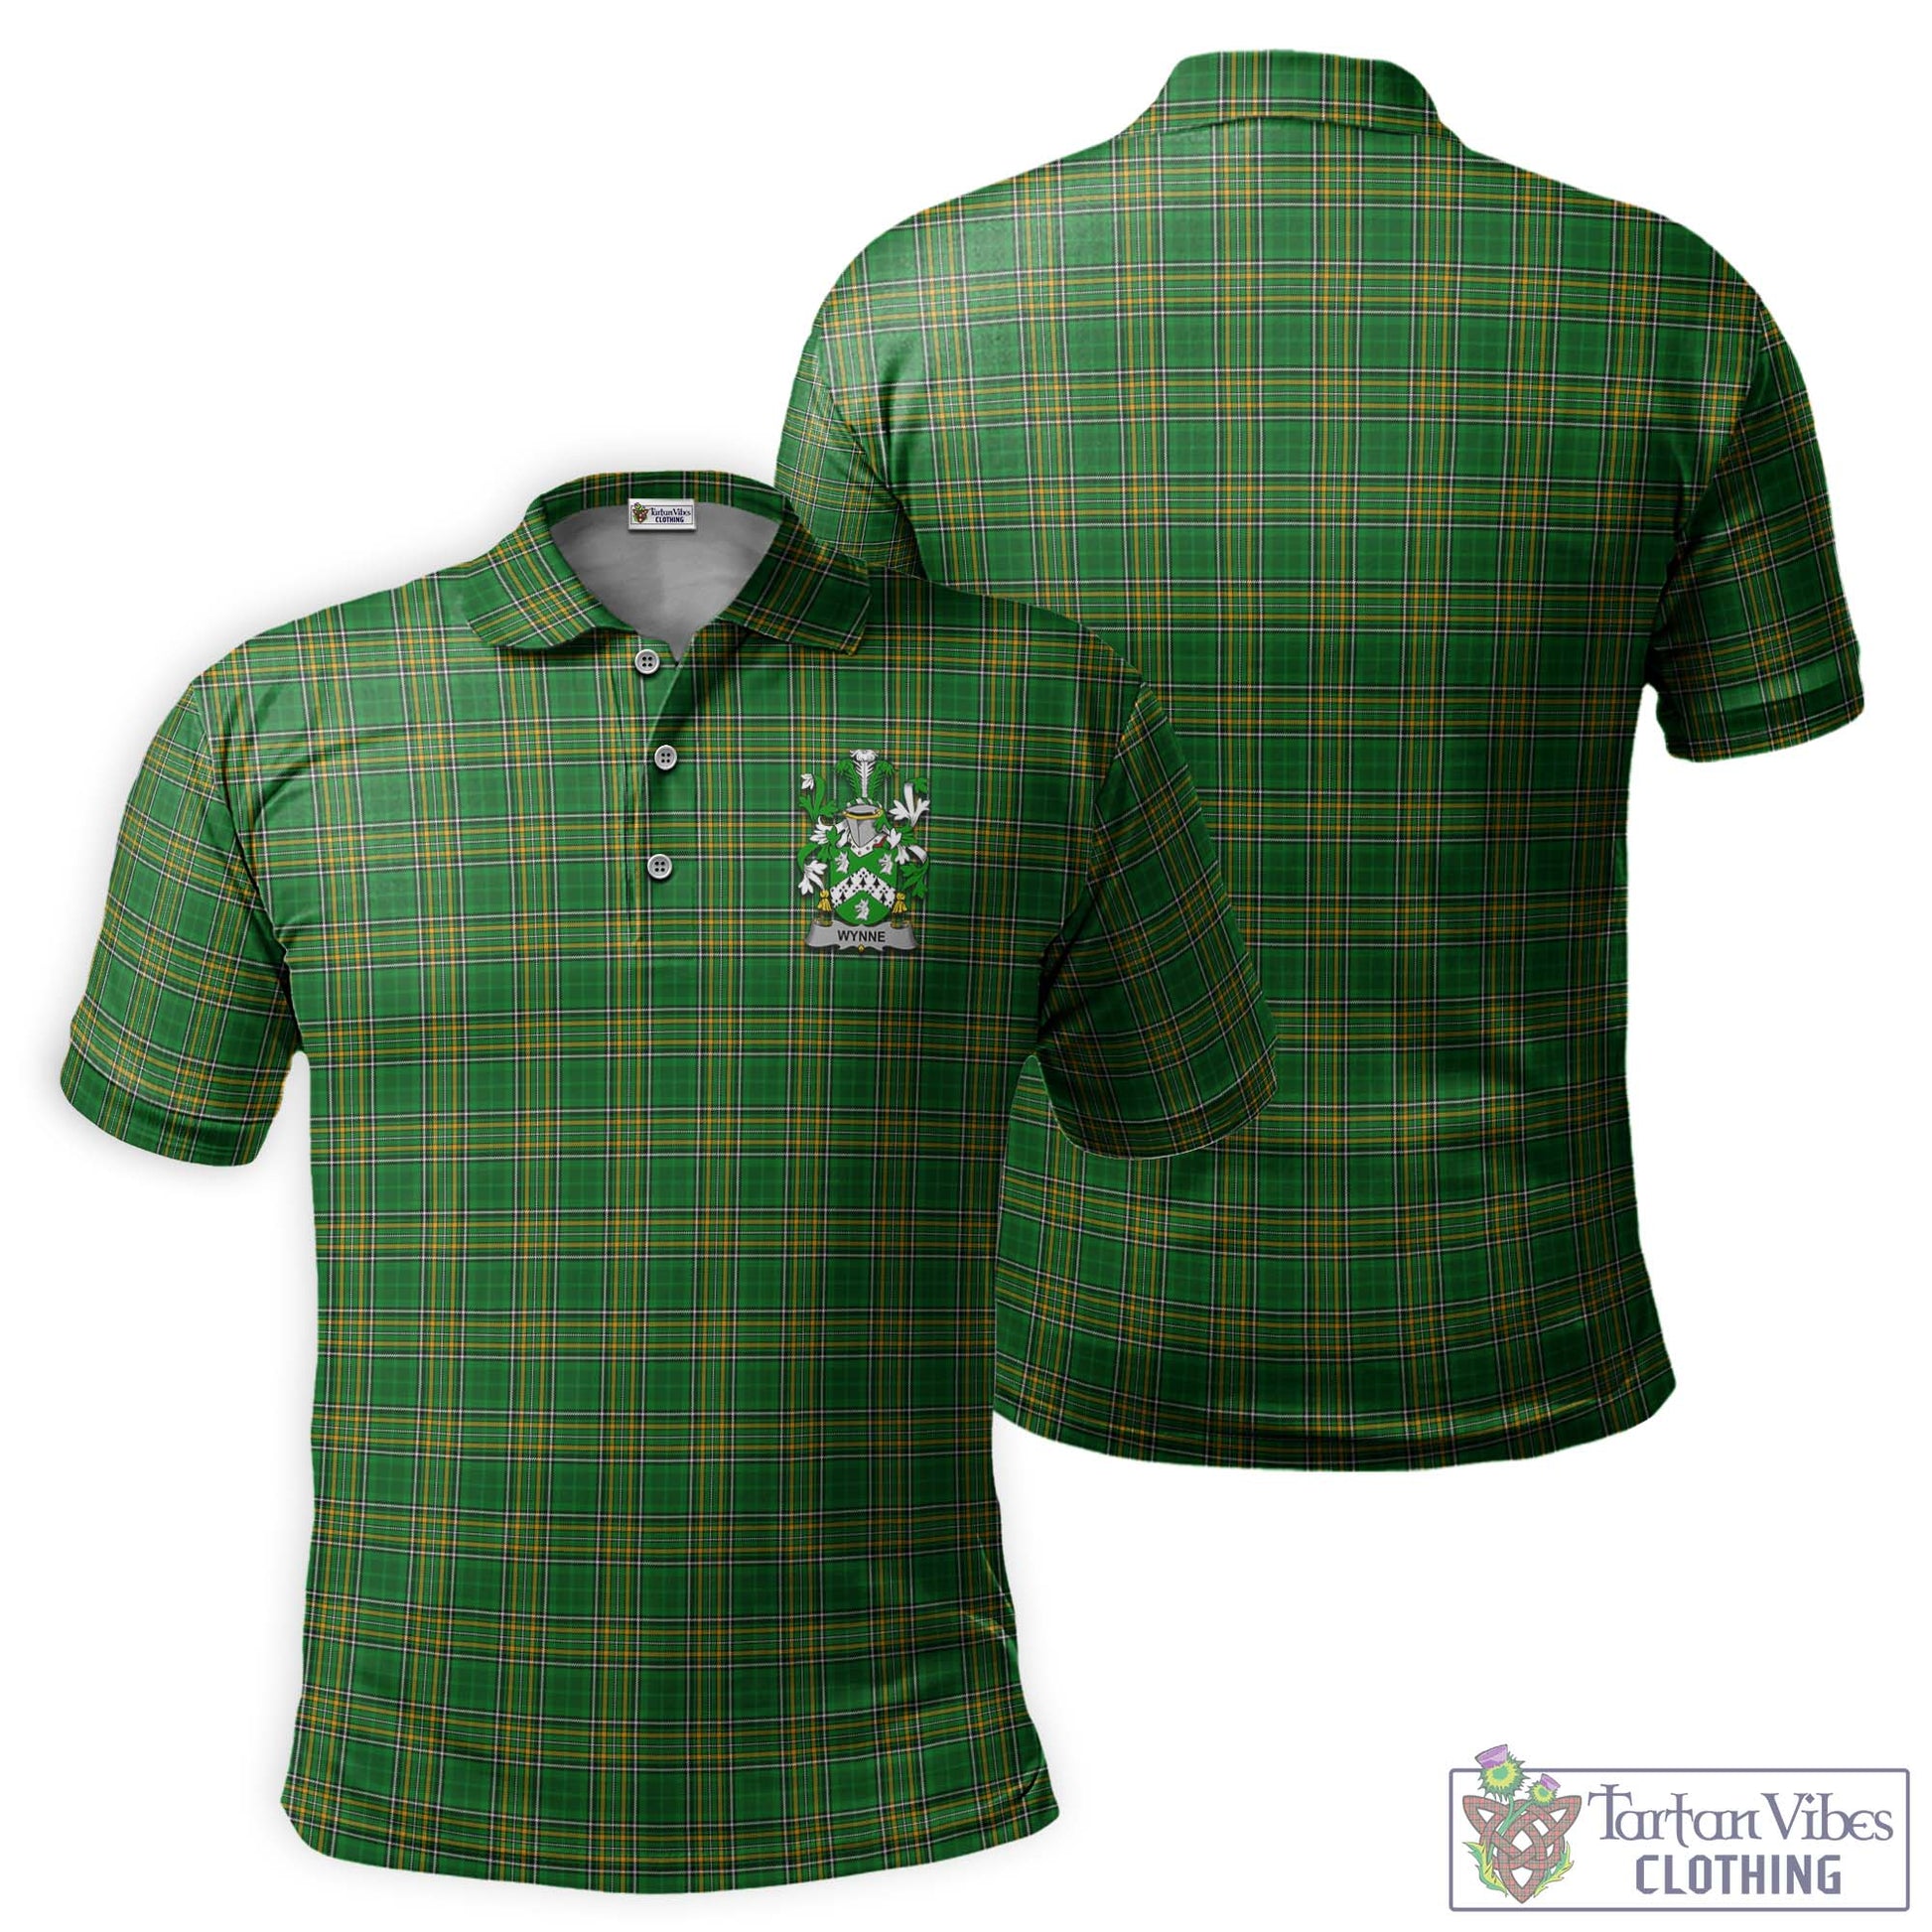 Tartan Vibes Clothing Wynne Ireland Clan Tartan Polo Shirt with Coat of Arms